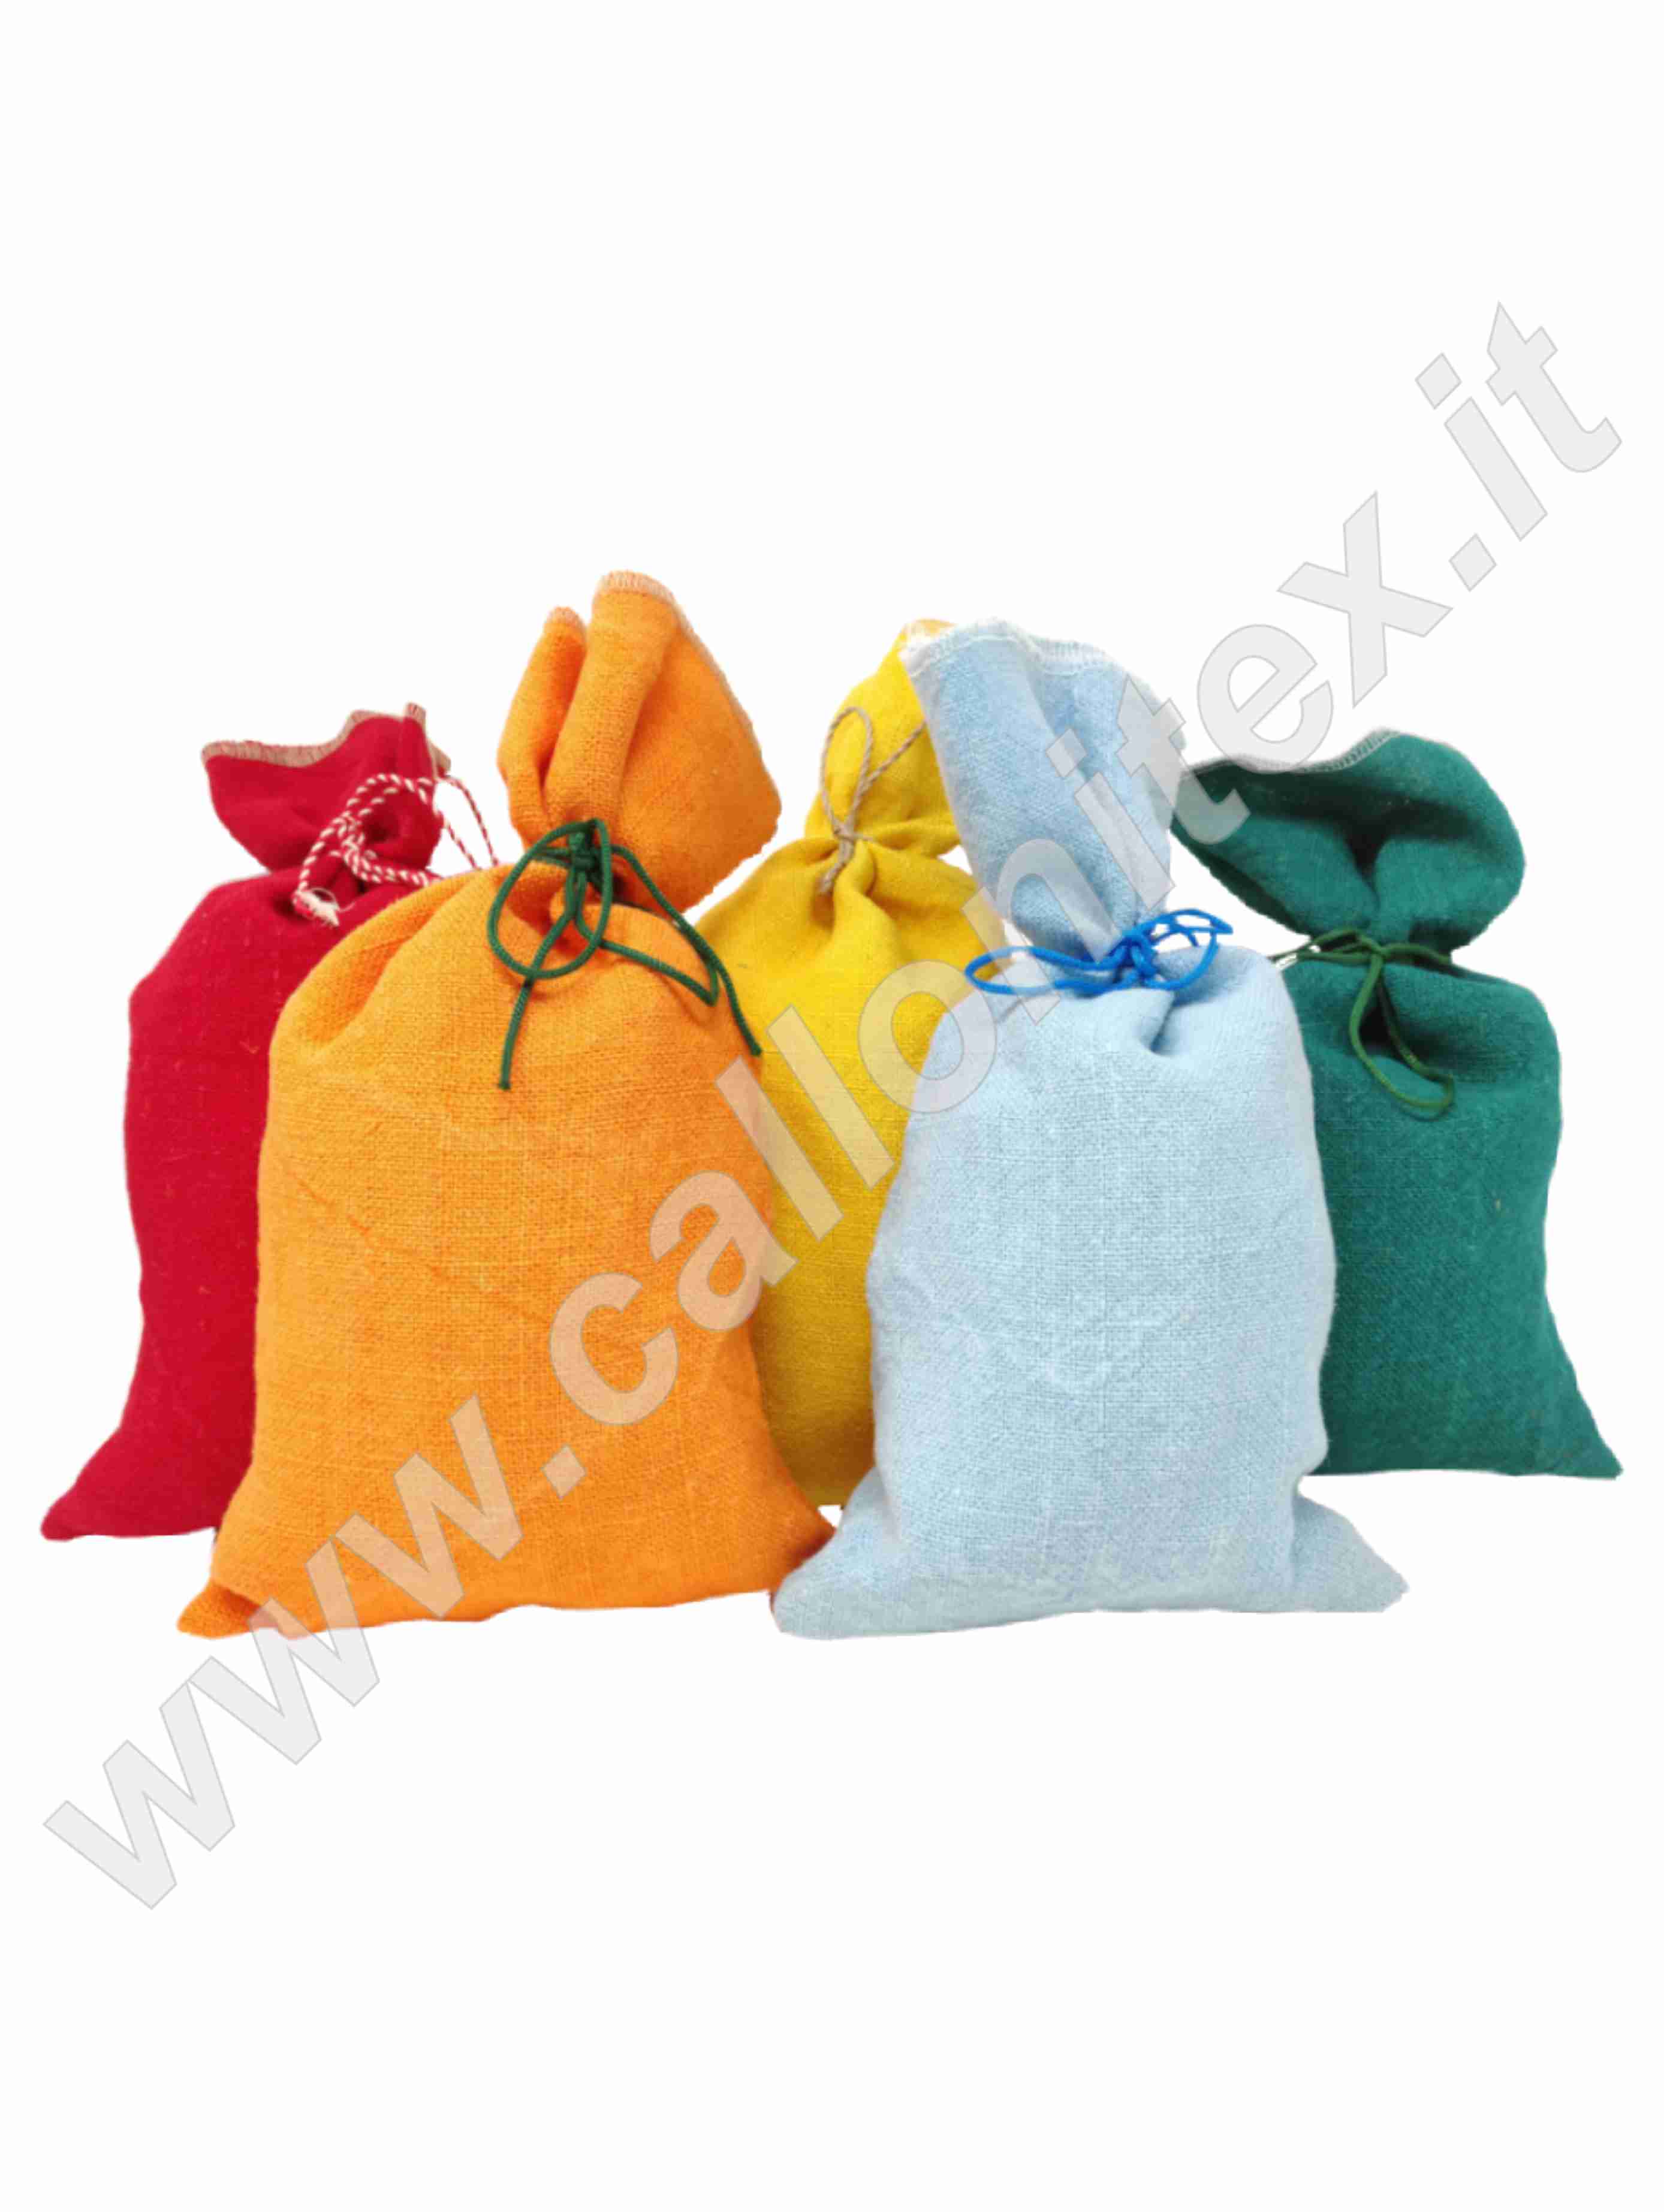 Colored jute bags 